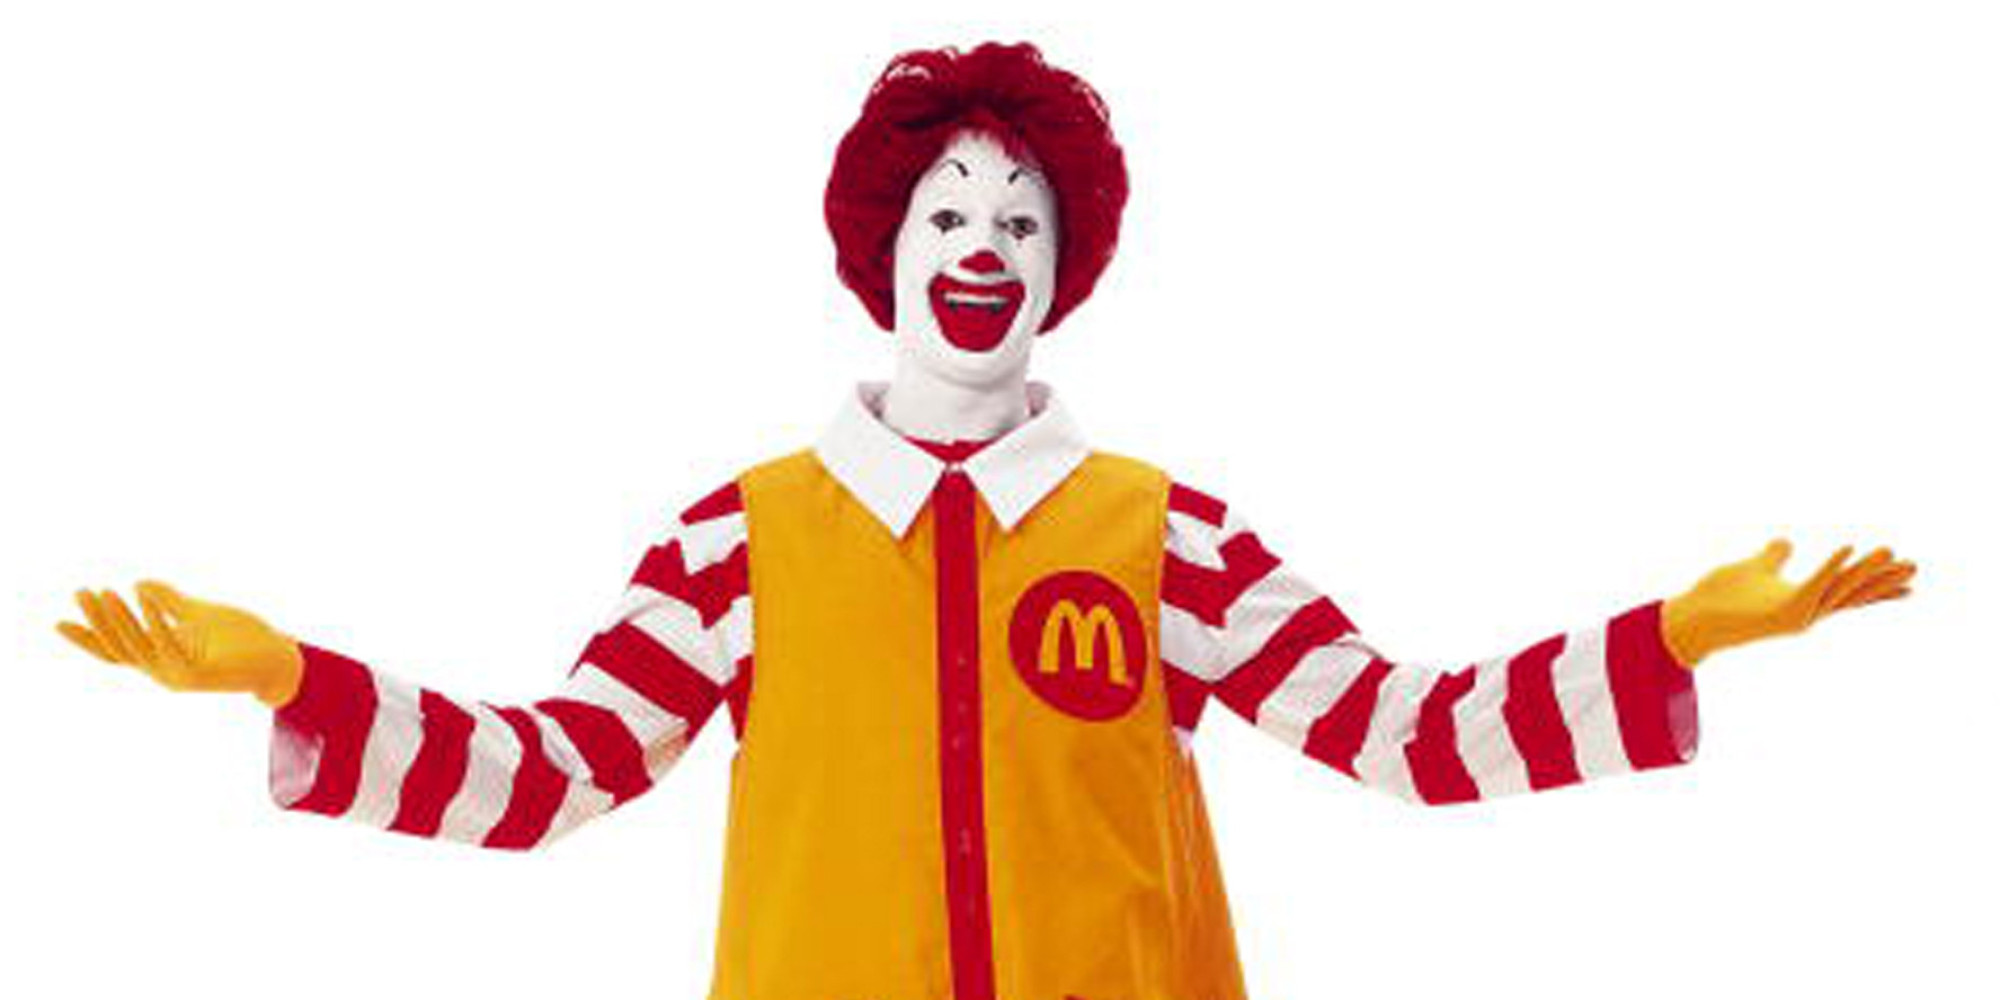 Ronald McDonald Identity Crisis